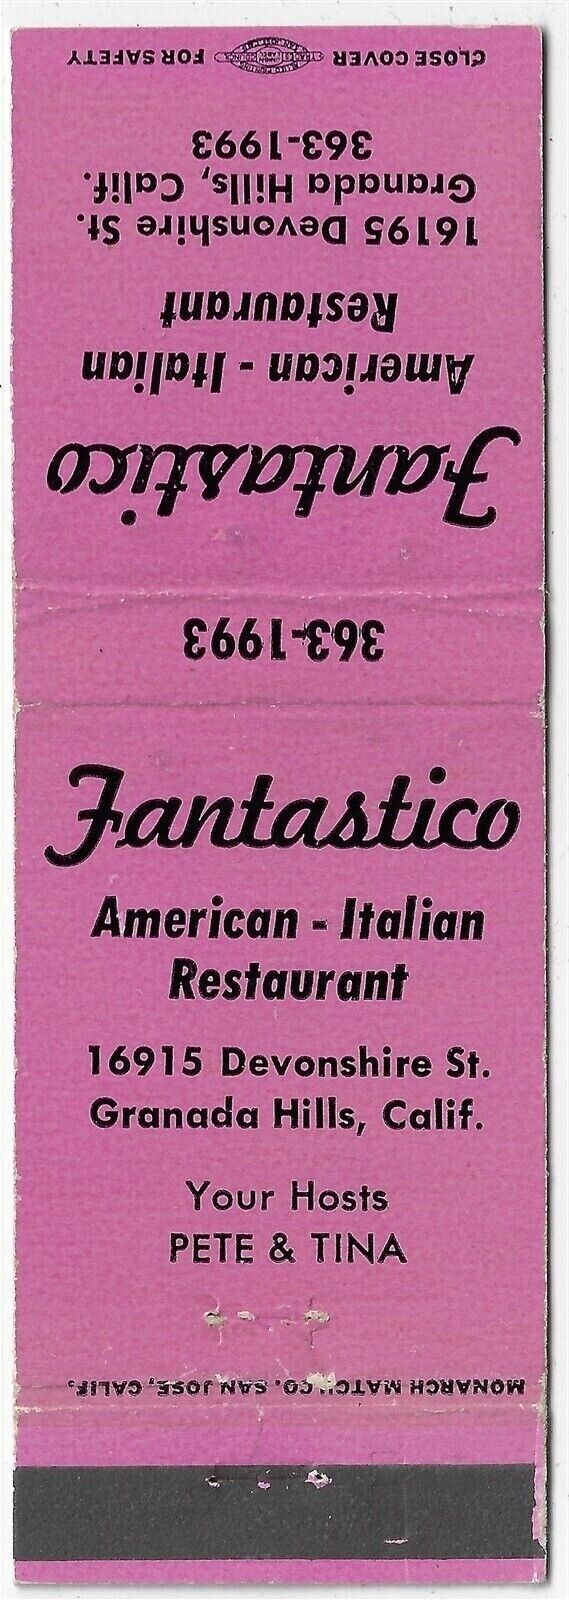 Fantastico American Italian Restaurant Granada Hills Calif.   Empty Matchcover